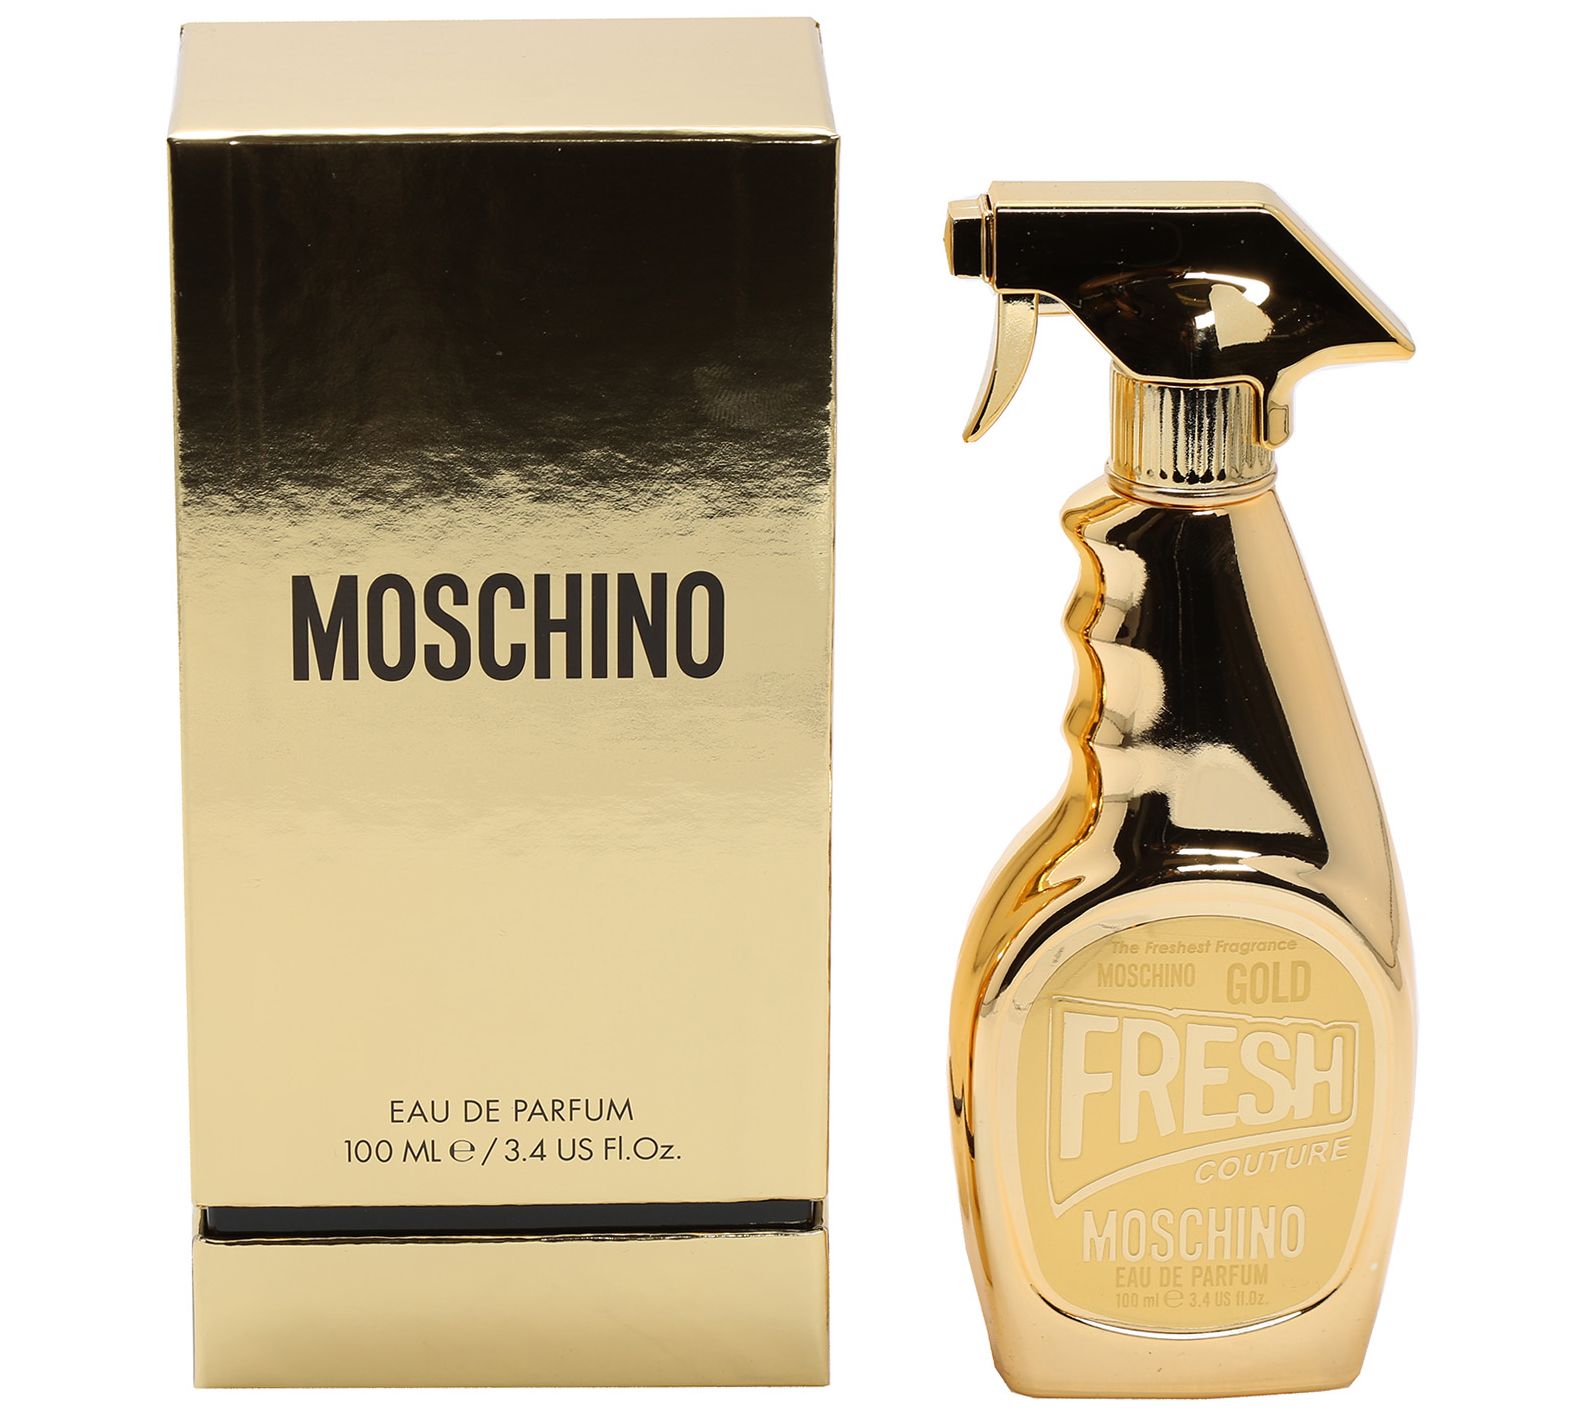 Moschino fresh gold. Moschino Gold Fresh Couture 30мл. Moschino Fresh Gold 100 мл. Moschino Gold Fresh аромат. Голд Москино женские.